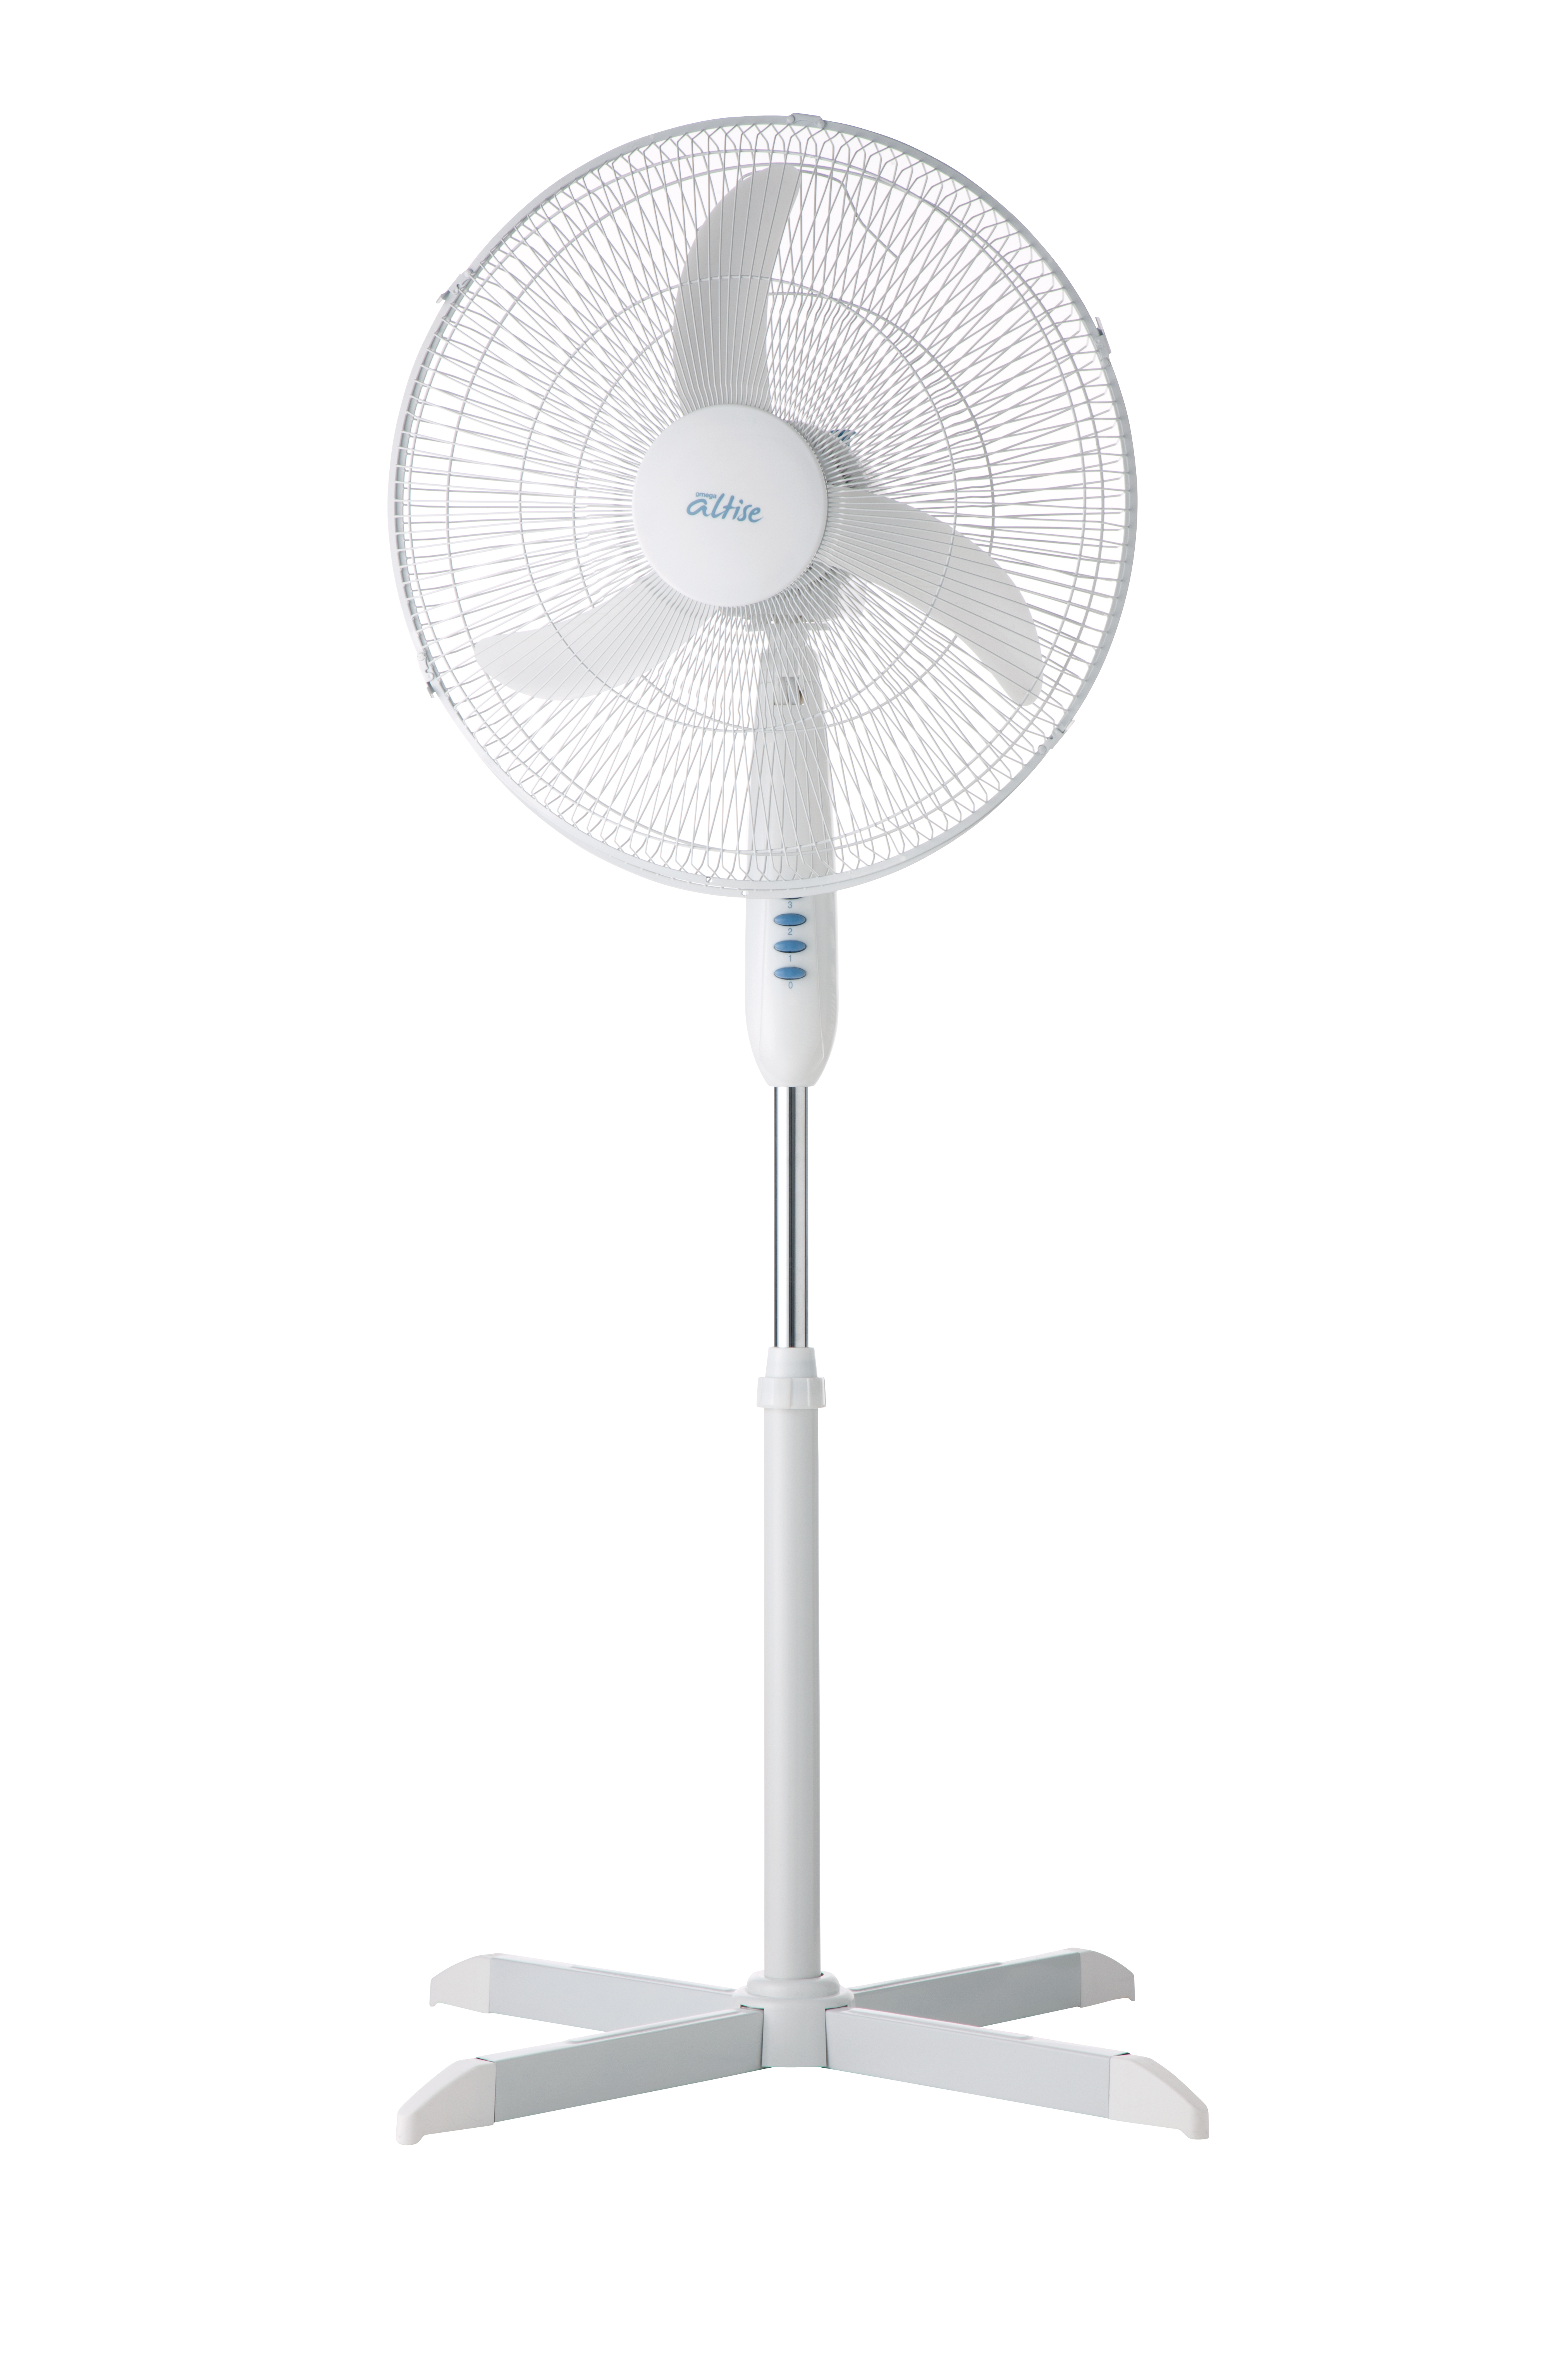 Omega Altise product Pedestal Fan 46cm  AP46WA Pedestal Fan